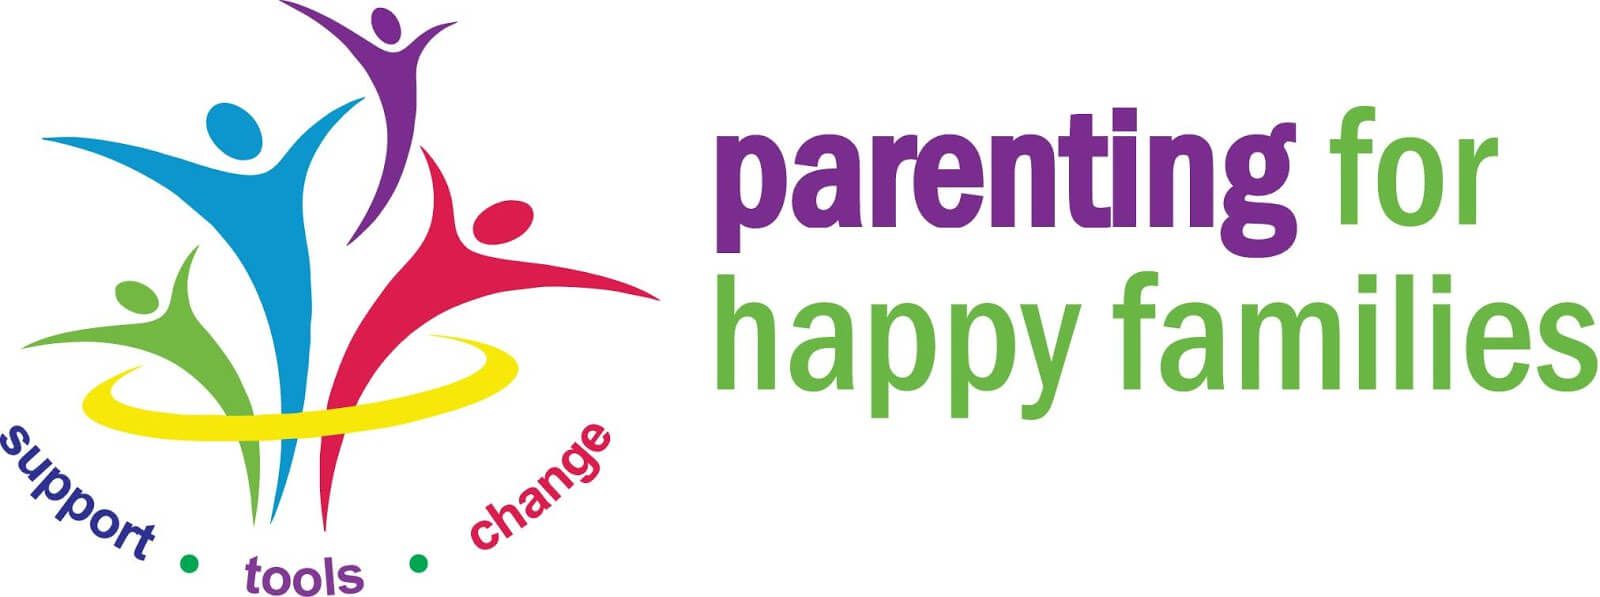 C:UsersSharon EganAppDataLocalTempTemp1_Parenting for happy families_Style Sheet Standards (3).zipPrintHorizontalColorParenting_for_happy_families_Horizontal_Color.jpg